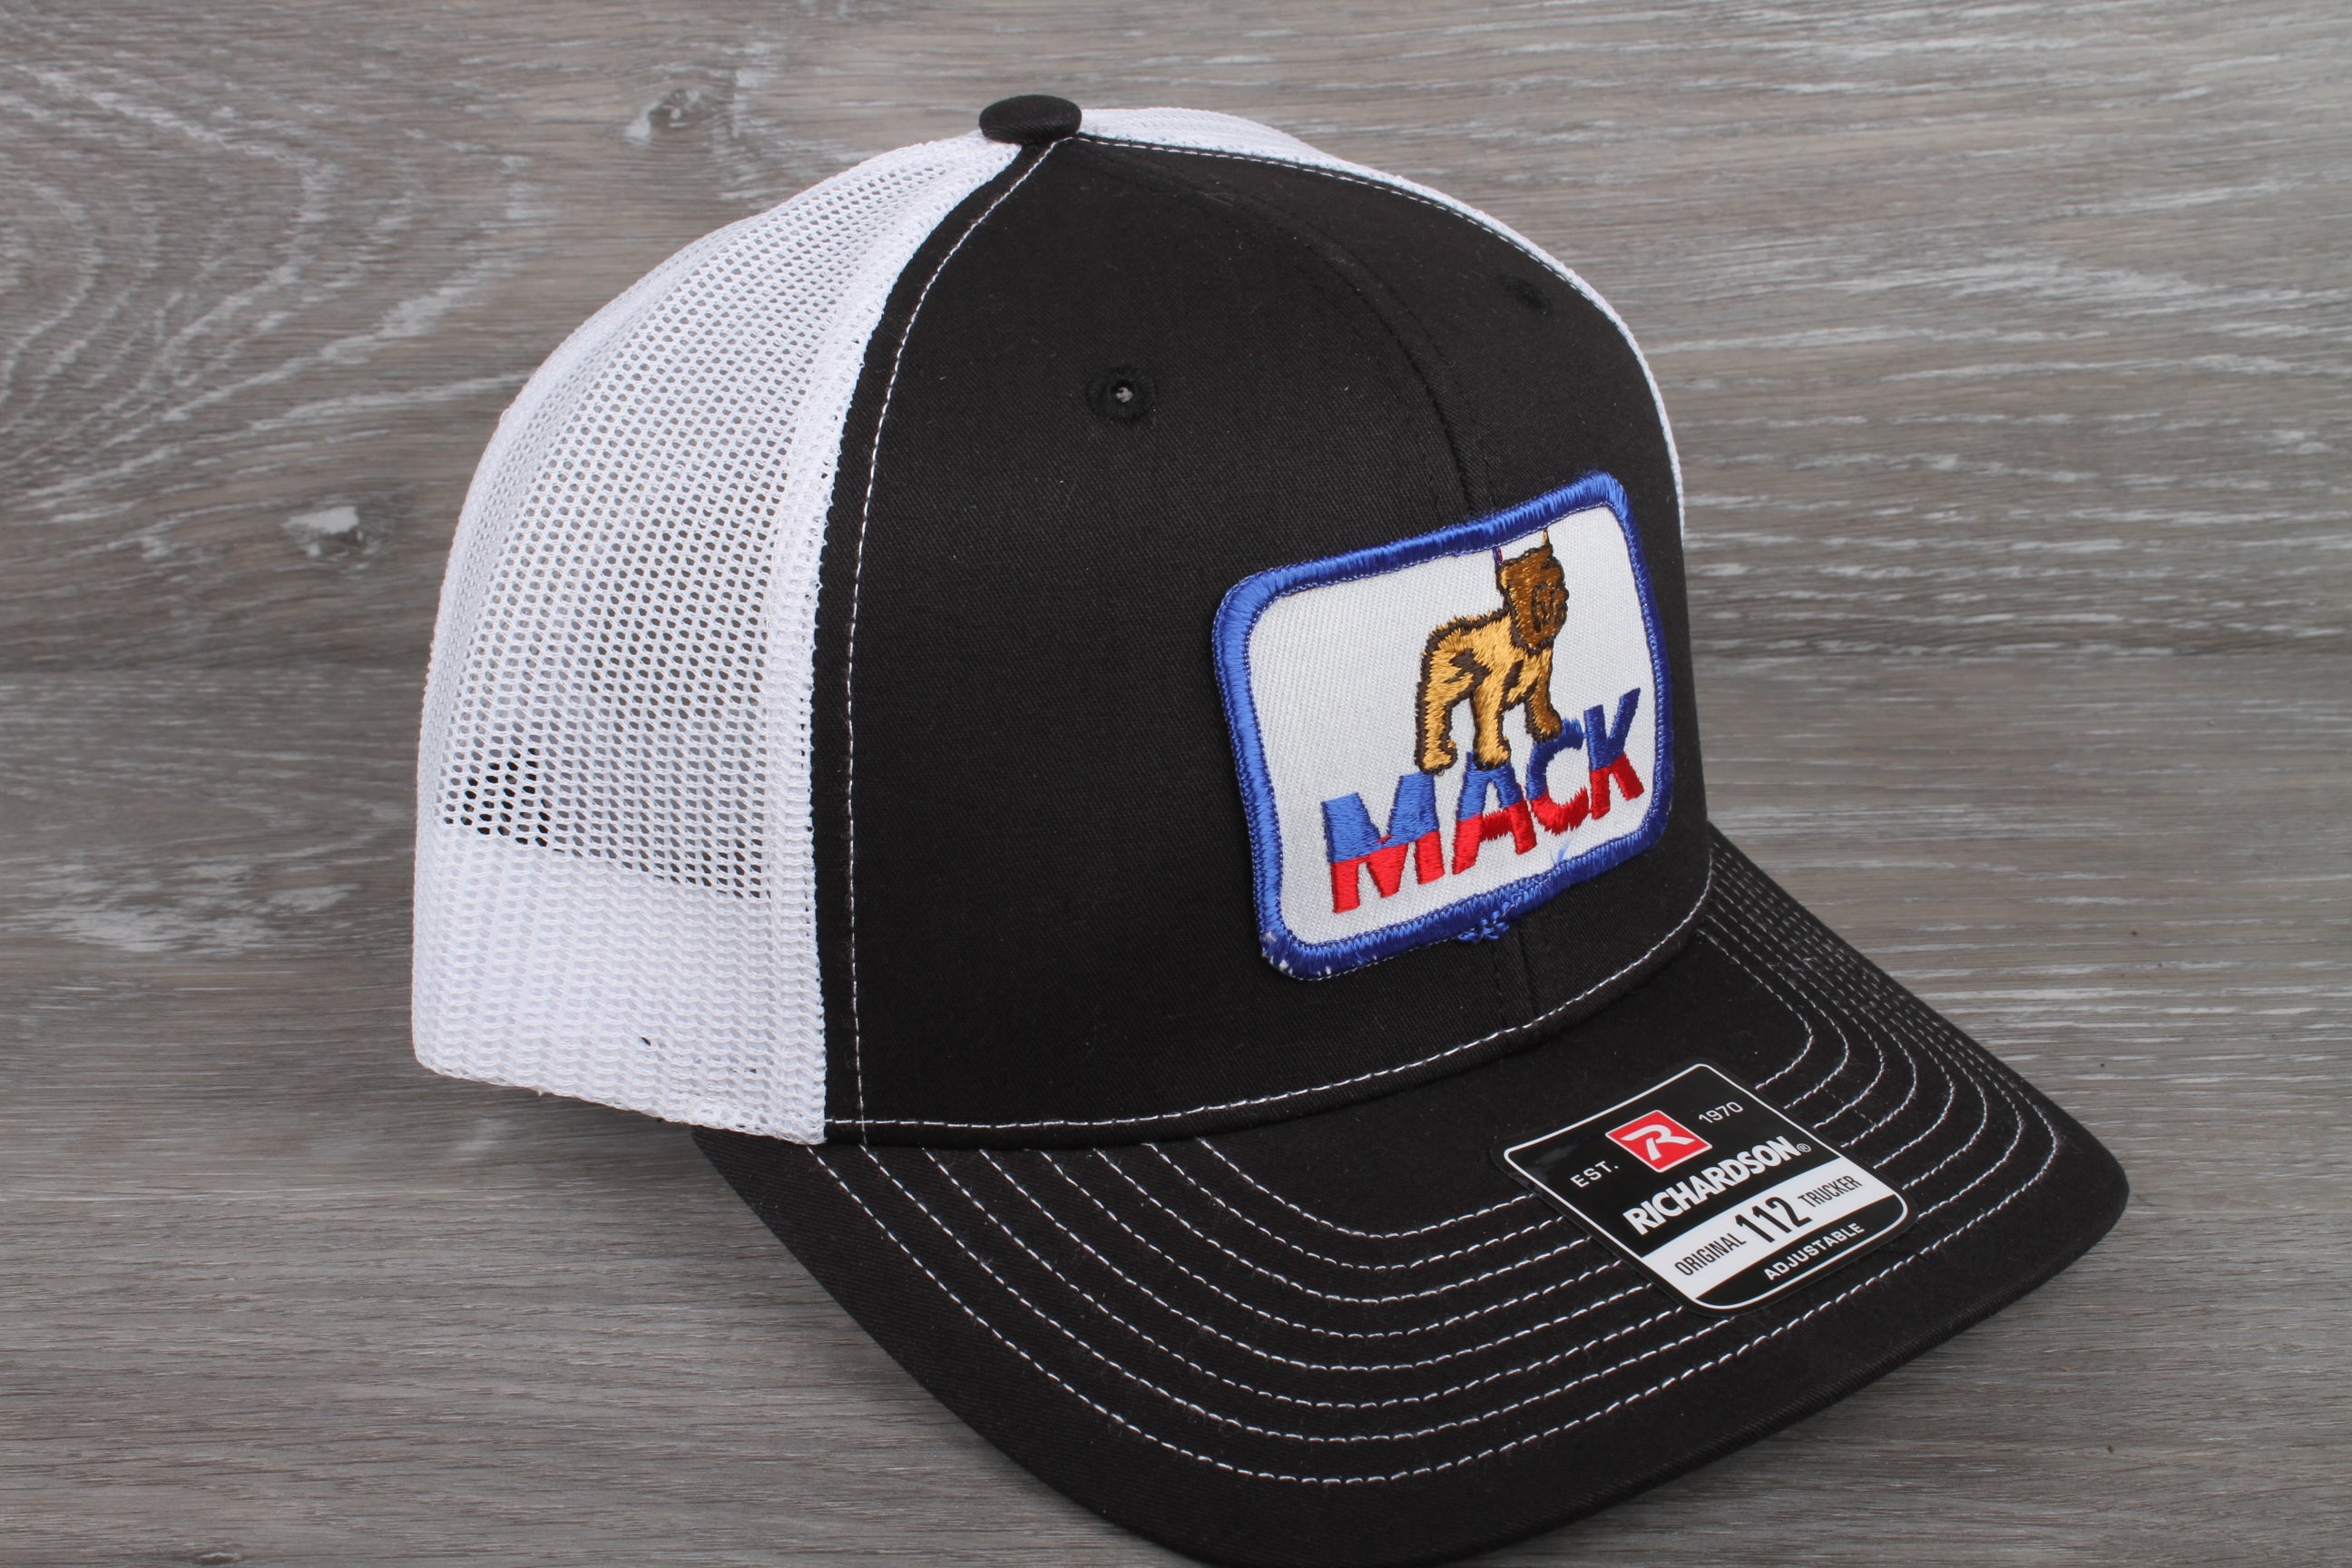 Vintage Mack patch on a Richardson 112 trucker hat